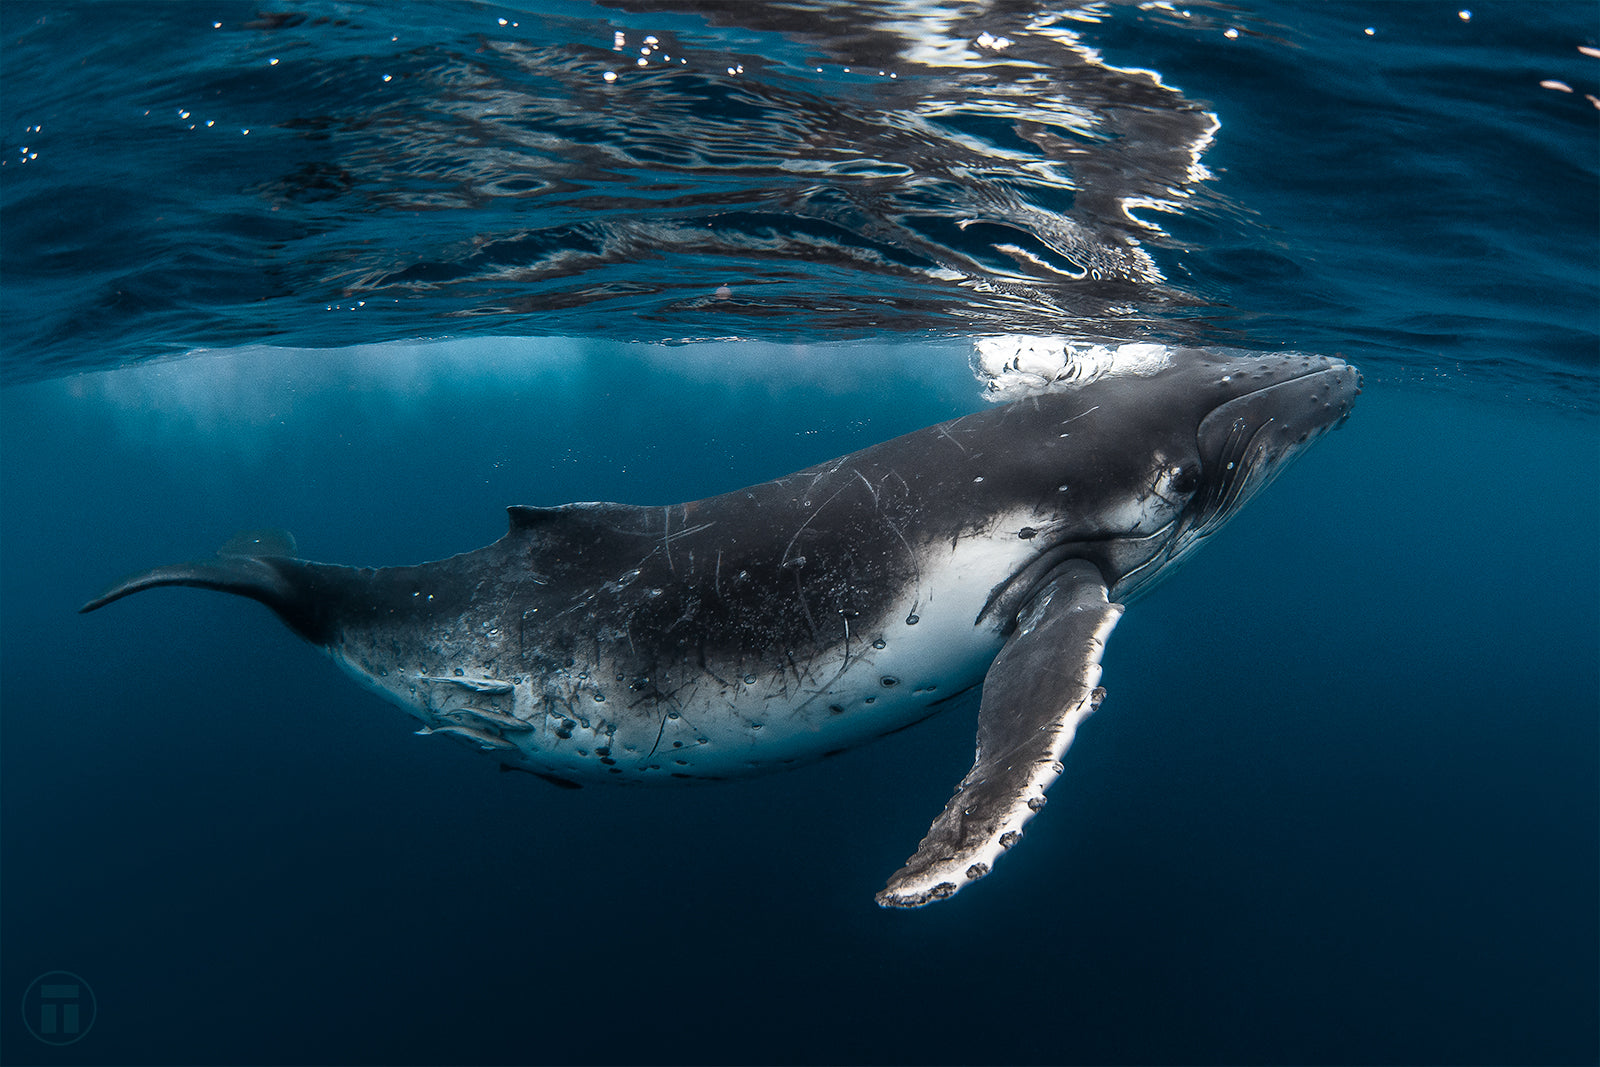 Clear shot of a humpback whale